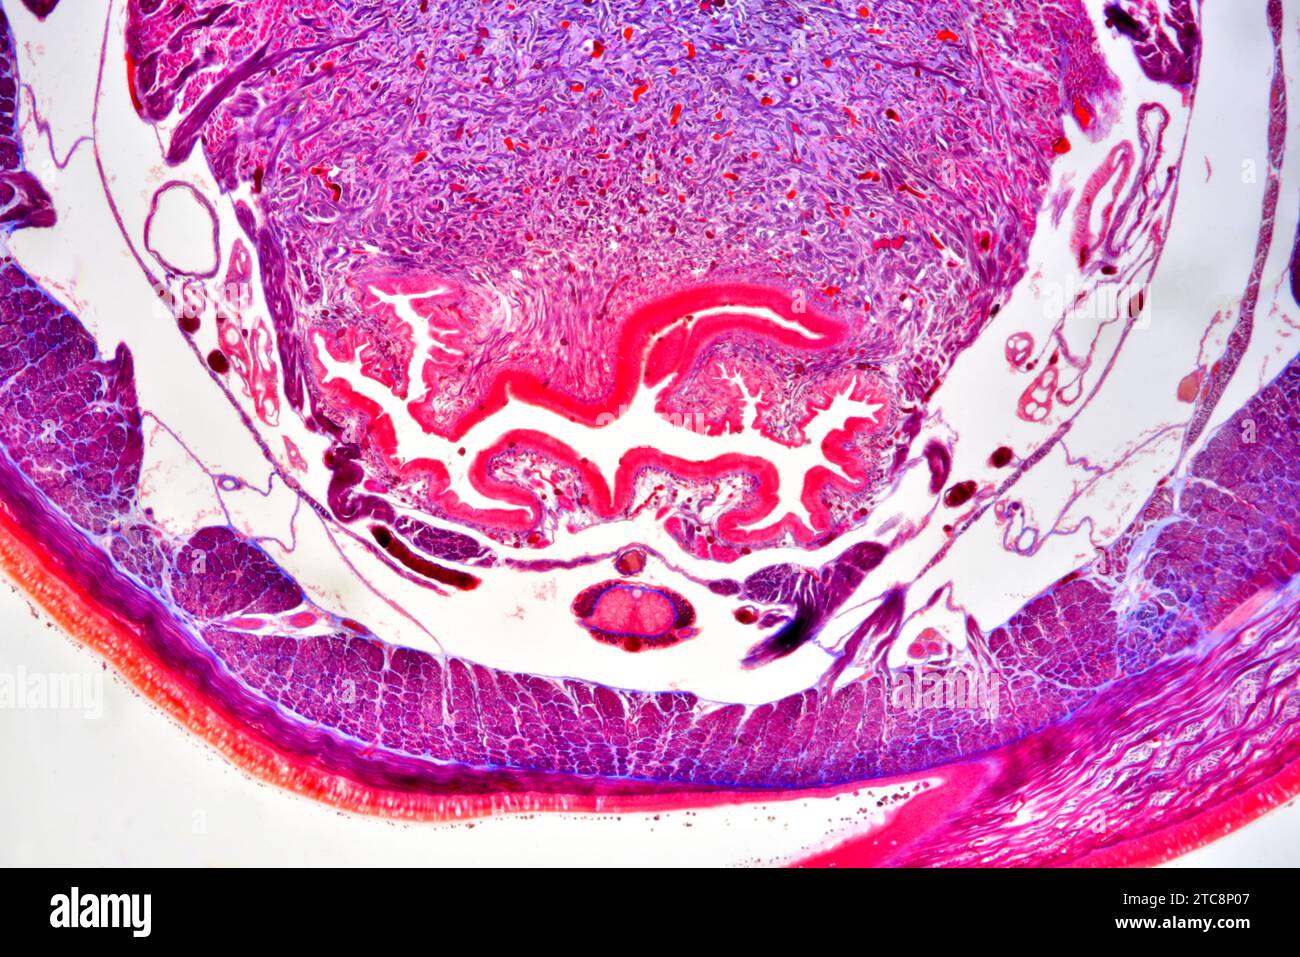 Earthworm (Oligochaeta) cross section showing cuticle, epidermis, circular and longitudinal muscles, nerve cord, blood vessel and intestine. Light mic Stock Photo